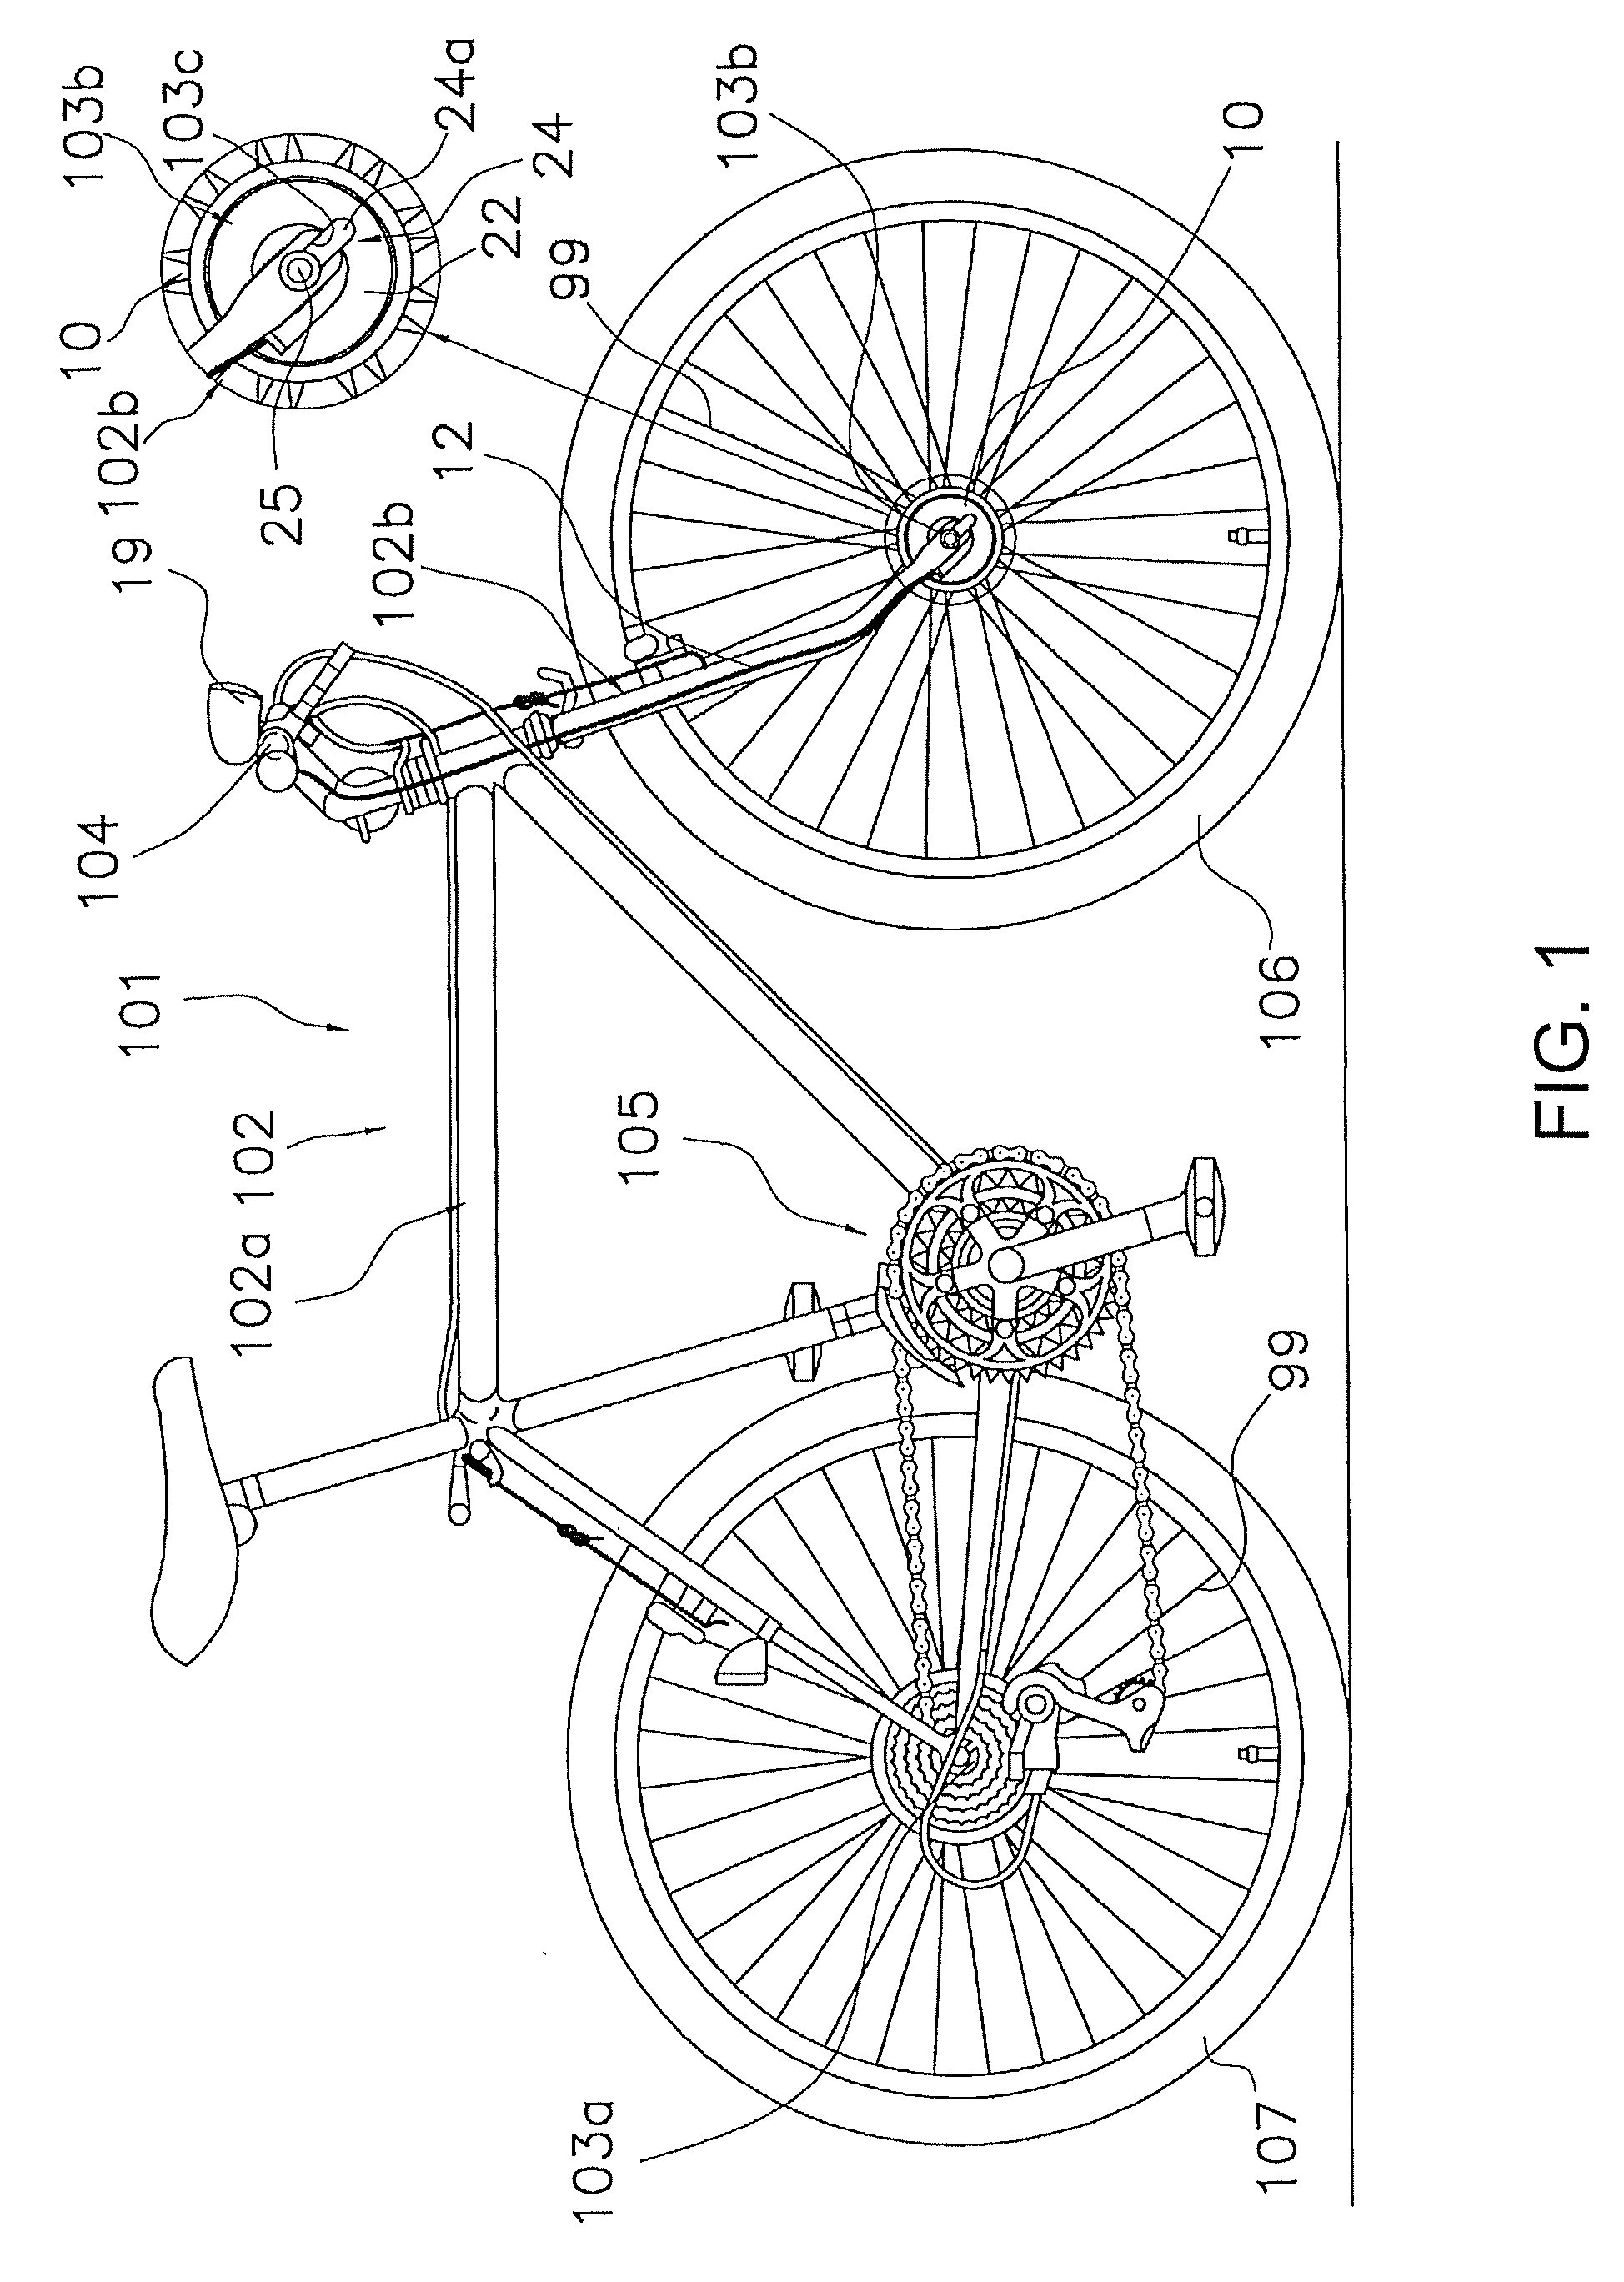 Bicycle generator hub